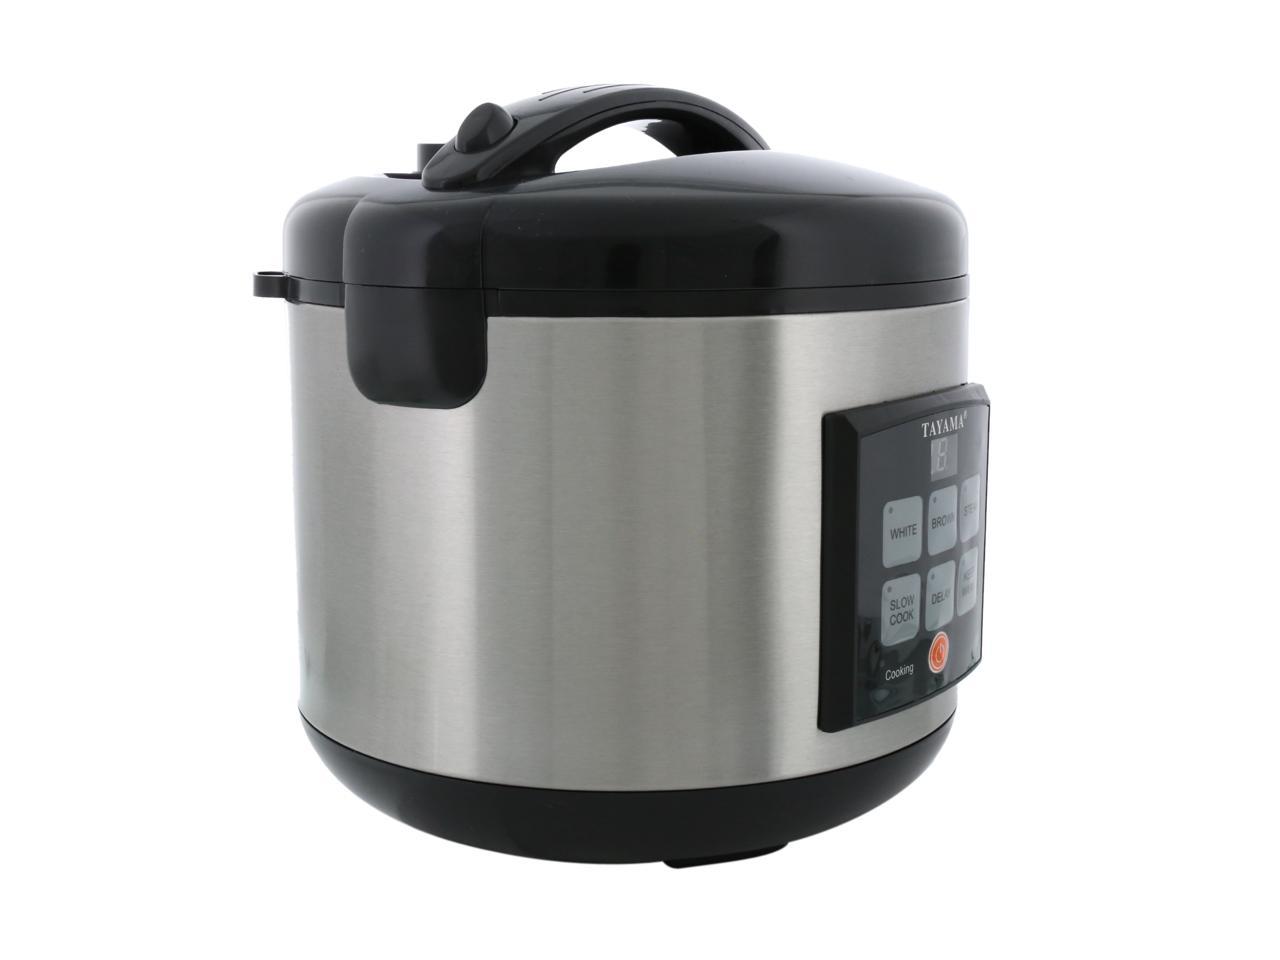 Tayama TRC-80 MICOM Digital Rice Cooker and Food Steamer, Black, 16 ...